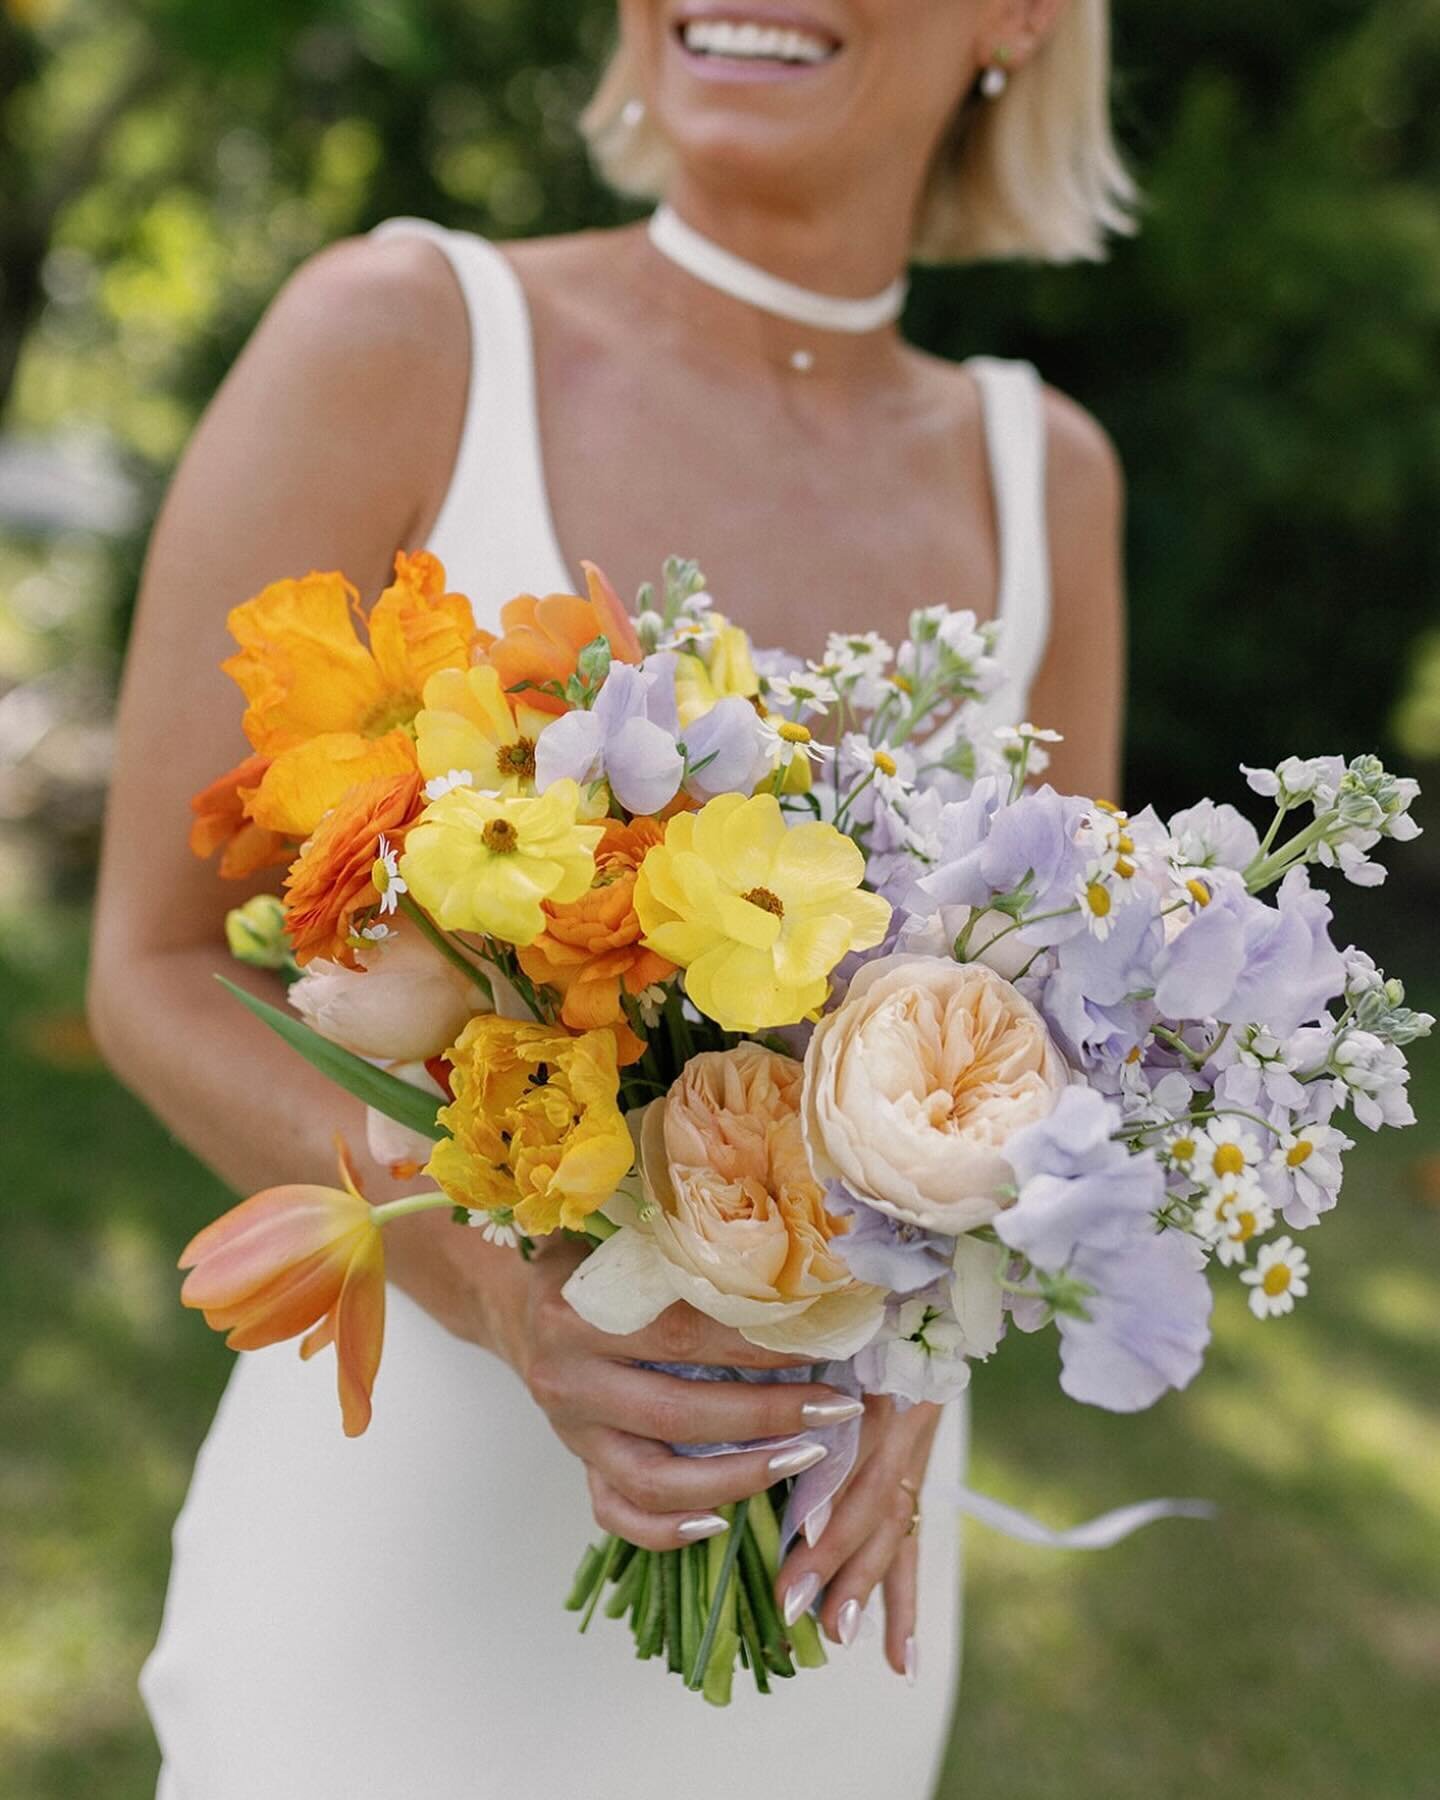 The colors of this wedding were perfection

#weddingflowers #weddinginspiration #gardenwedding #charlestonweddingflorist #charlestonweddingfloraldesigner #2024bride